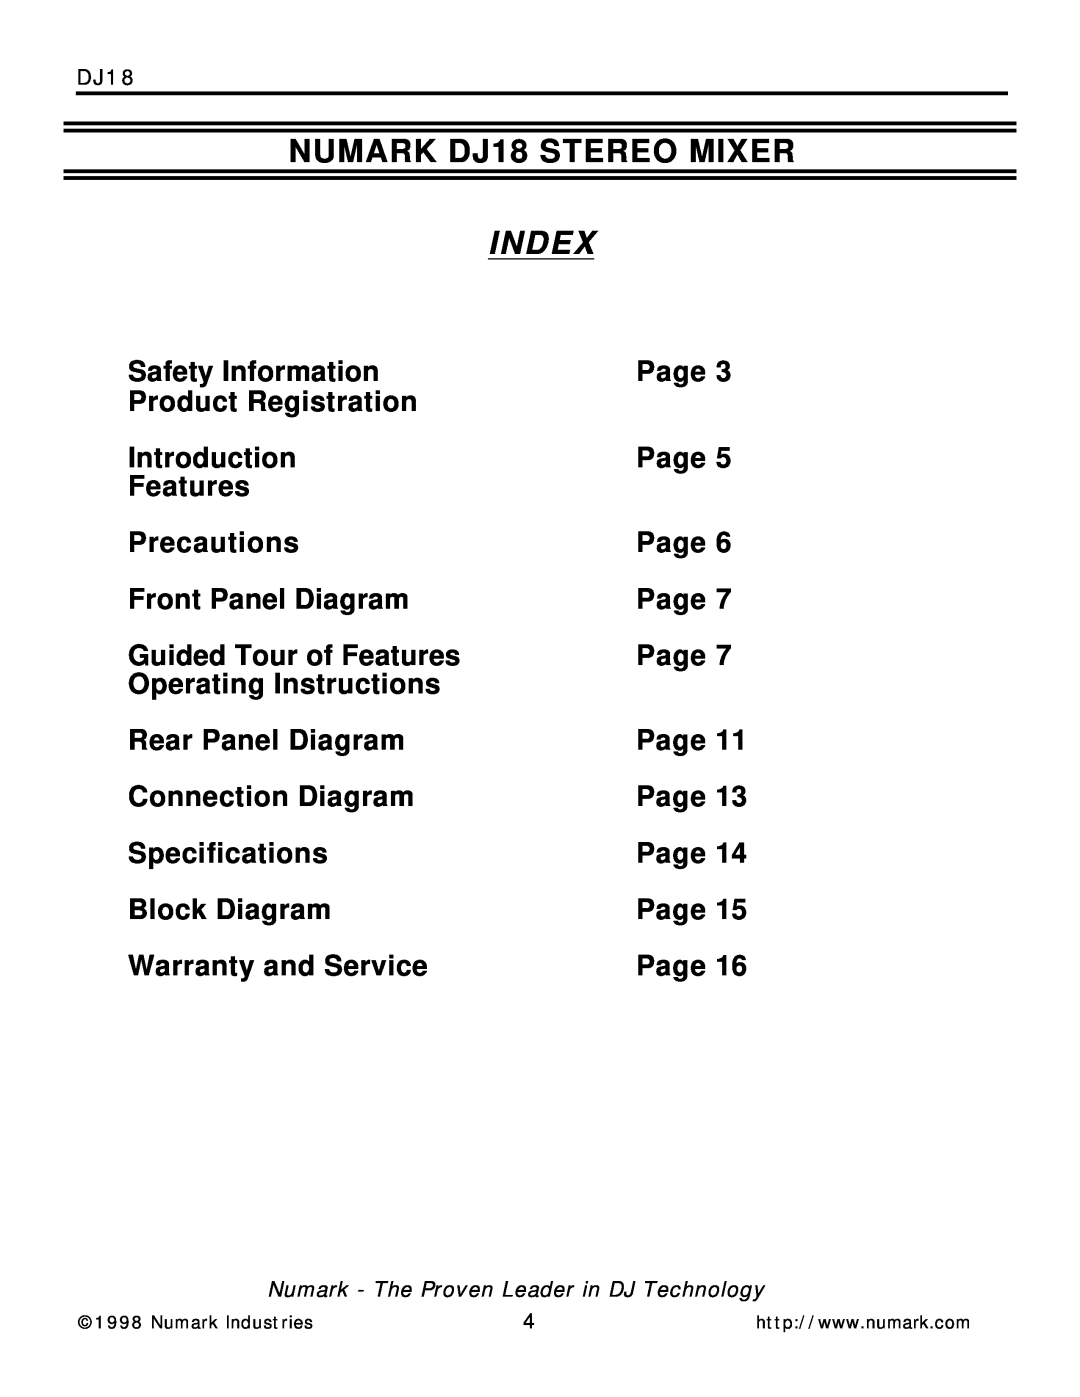 Numark Industries DJ-18 owner manual Index, NUMARK DJ18 STEREO MIXER 